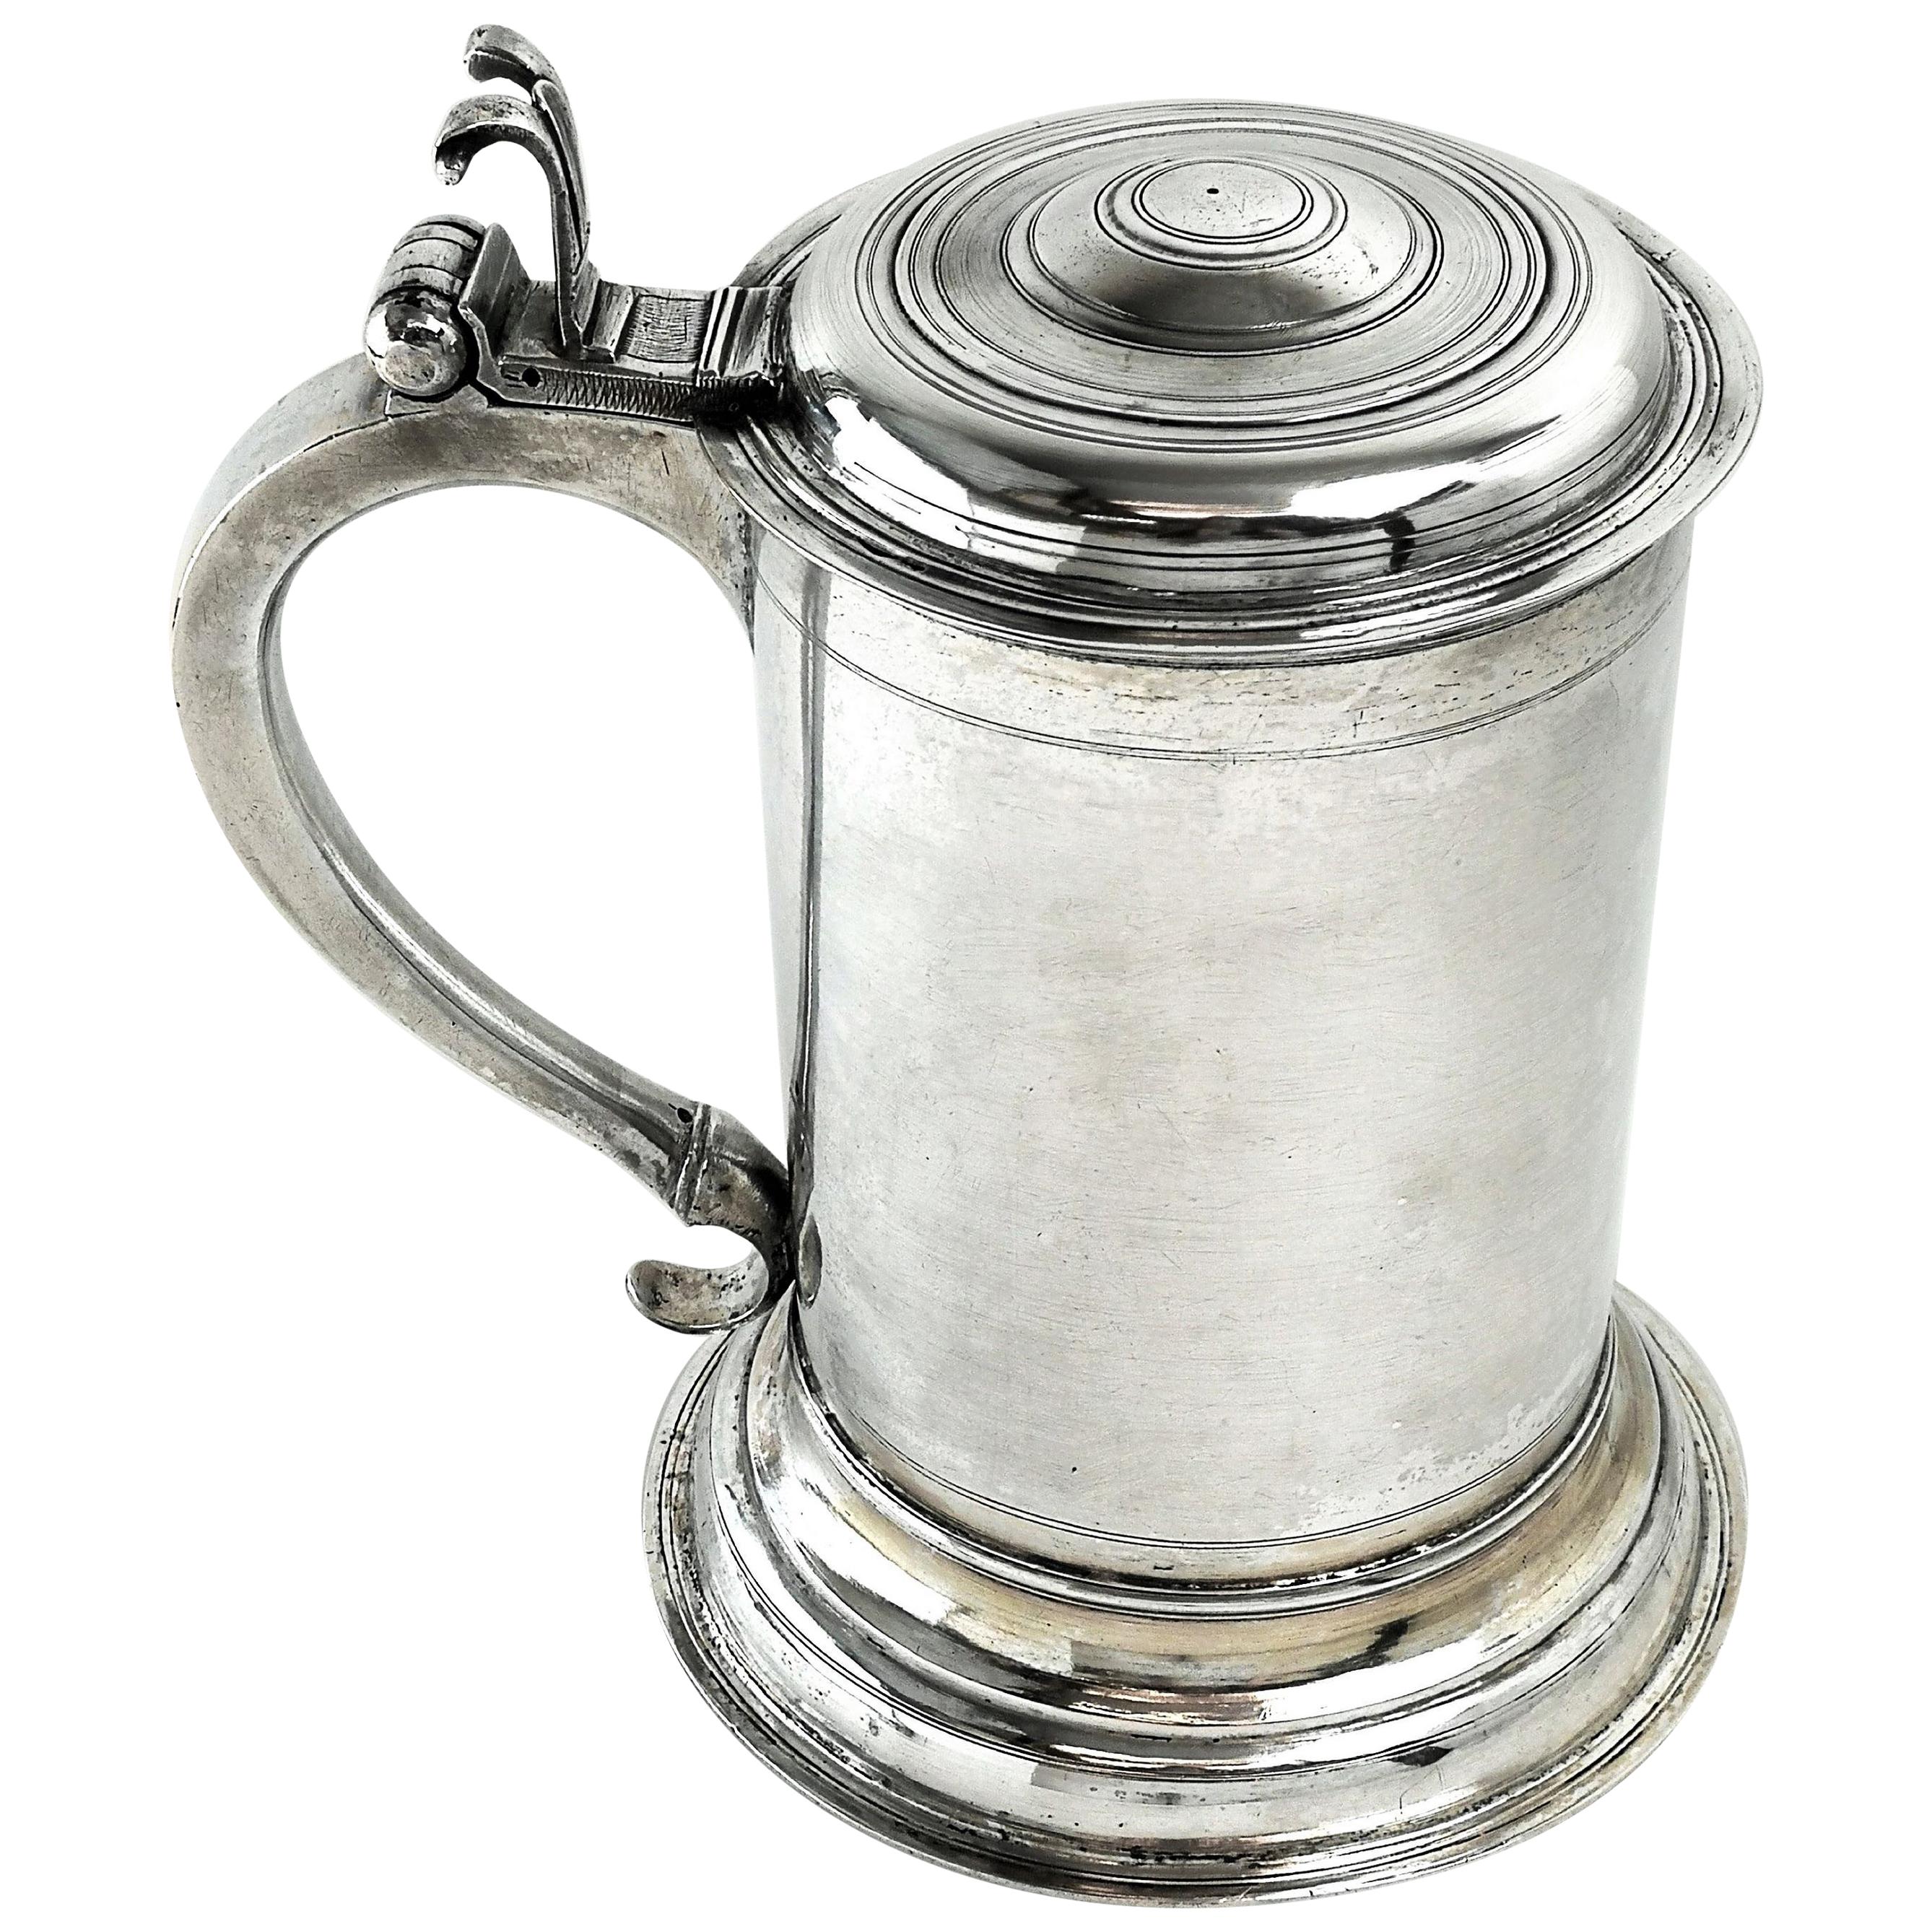 Antique German Silver Lidded Tankard / Beer Mug Berlin c 1700 early 18th century